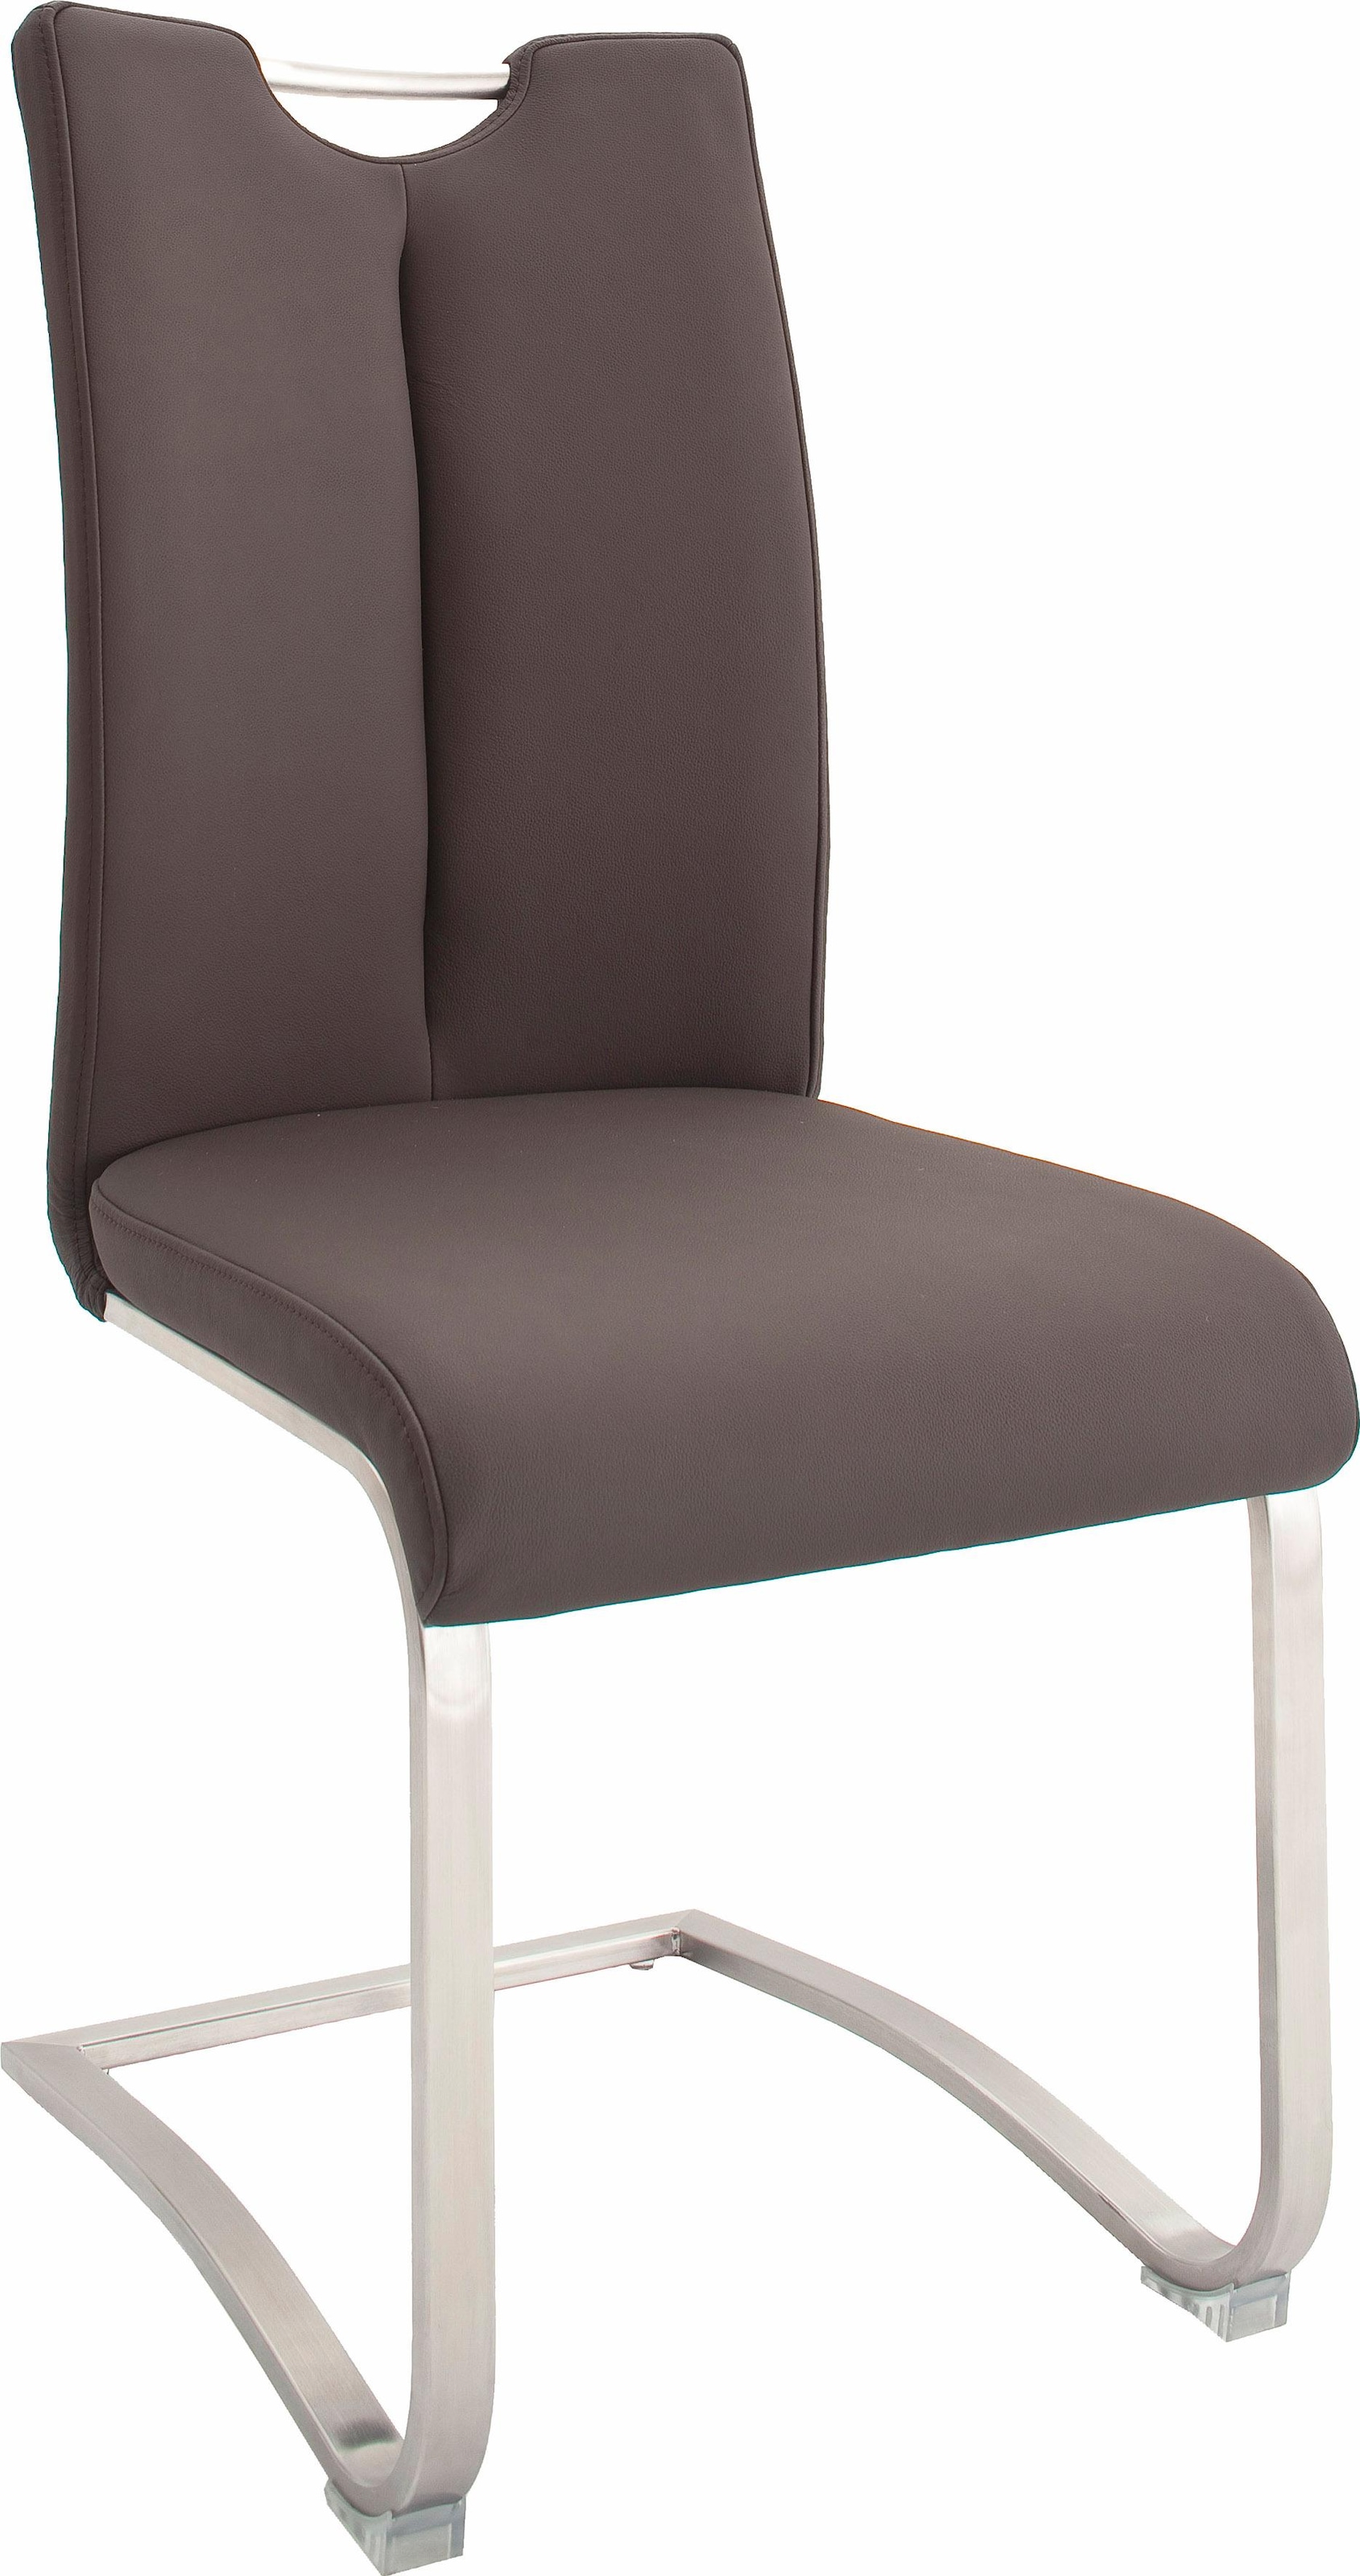 MCA furniture Freischwinger »Artos«, Echtlederbezug, bas Leder, belastbar prix à St., bis Kg mit 2 (Set), 140 Stuhl